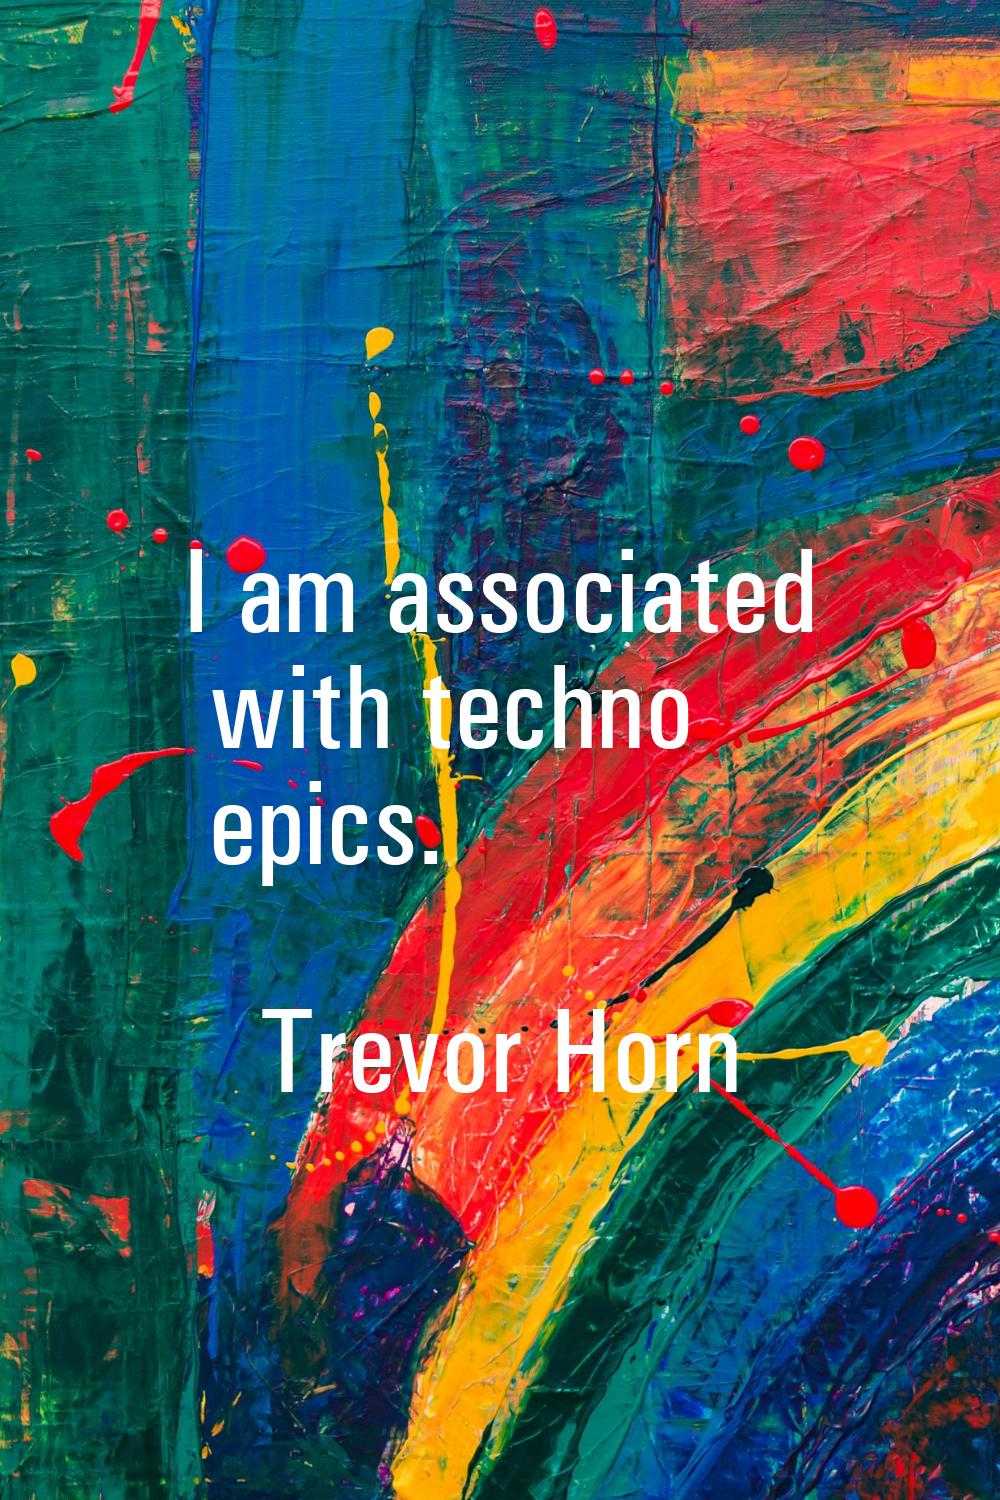 I am associated with techno epics.